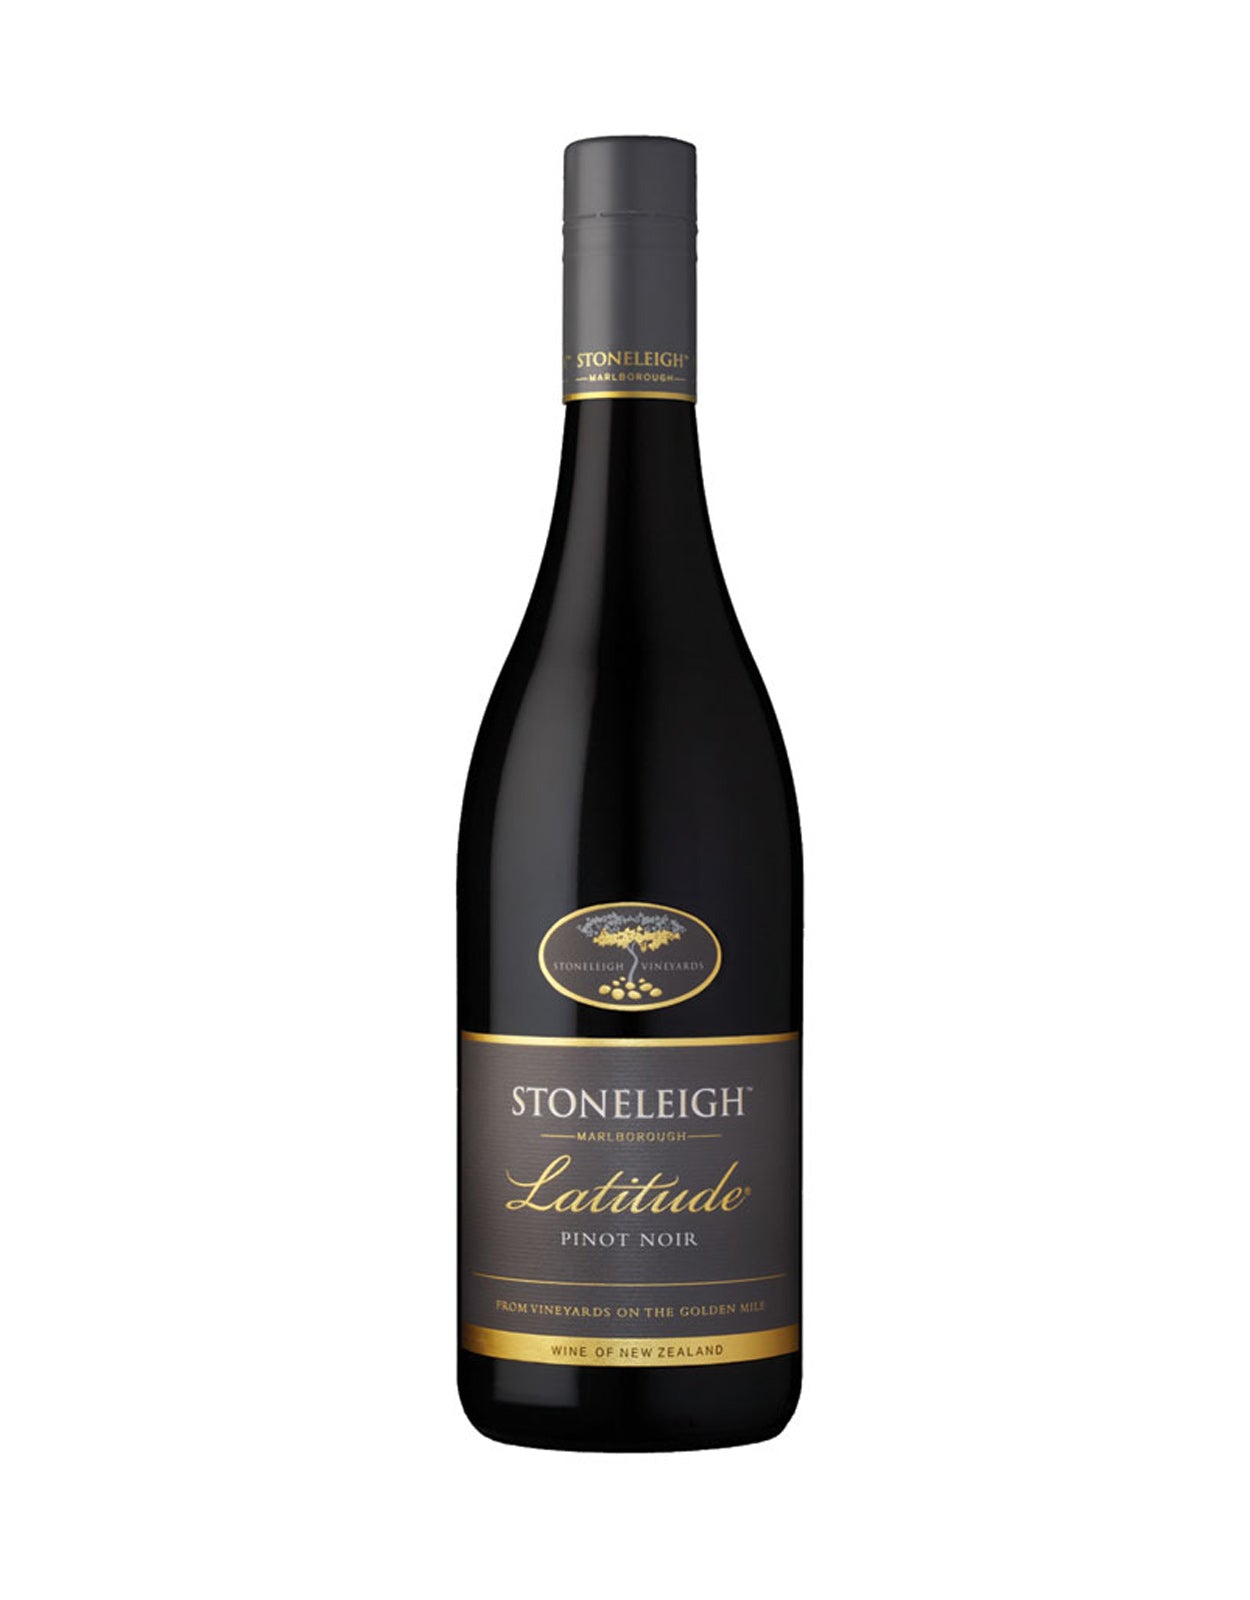 Stoneleigh Pinot Noir Latitude